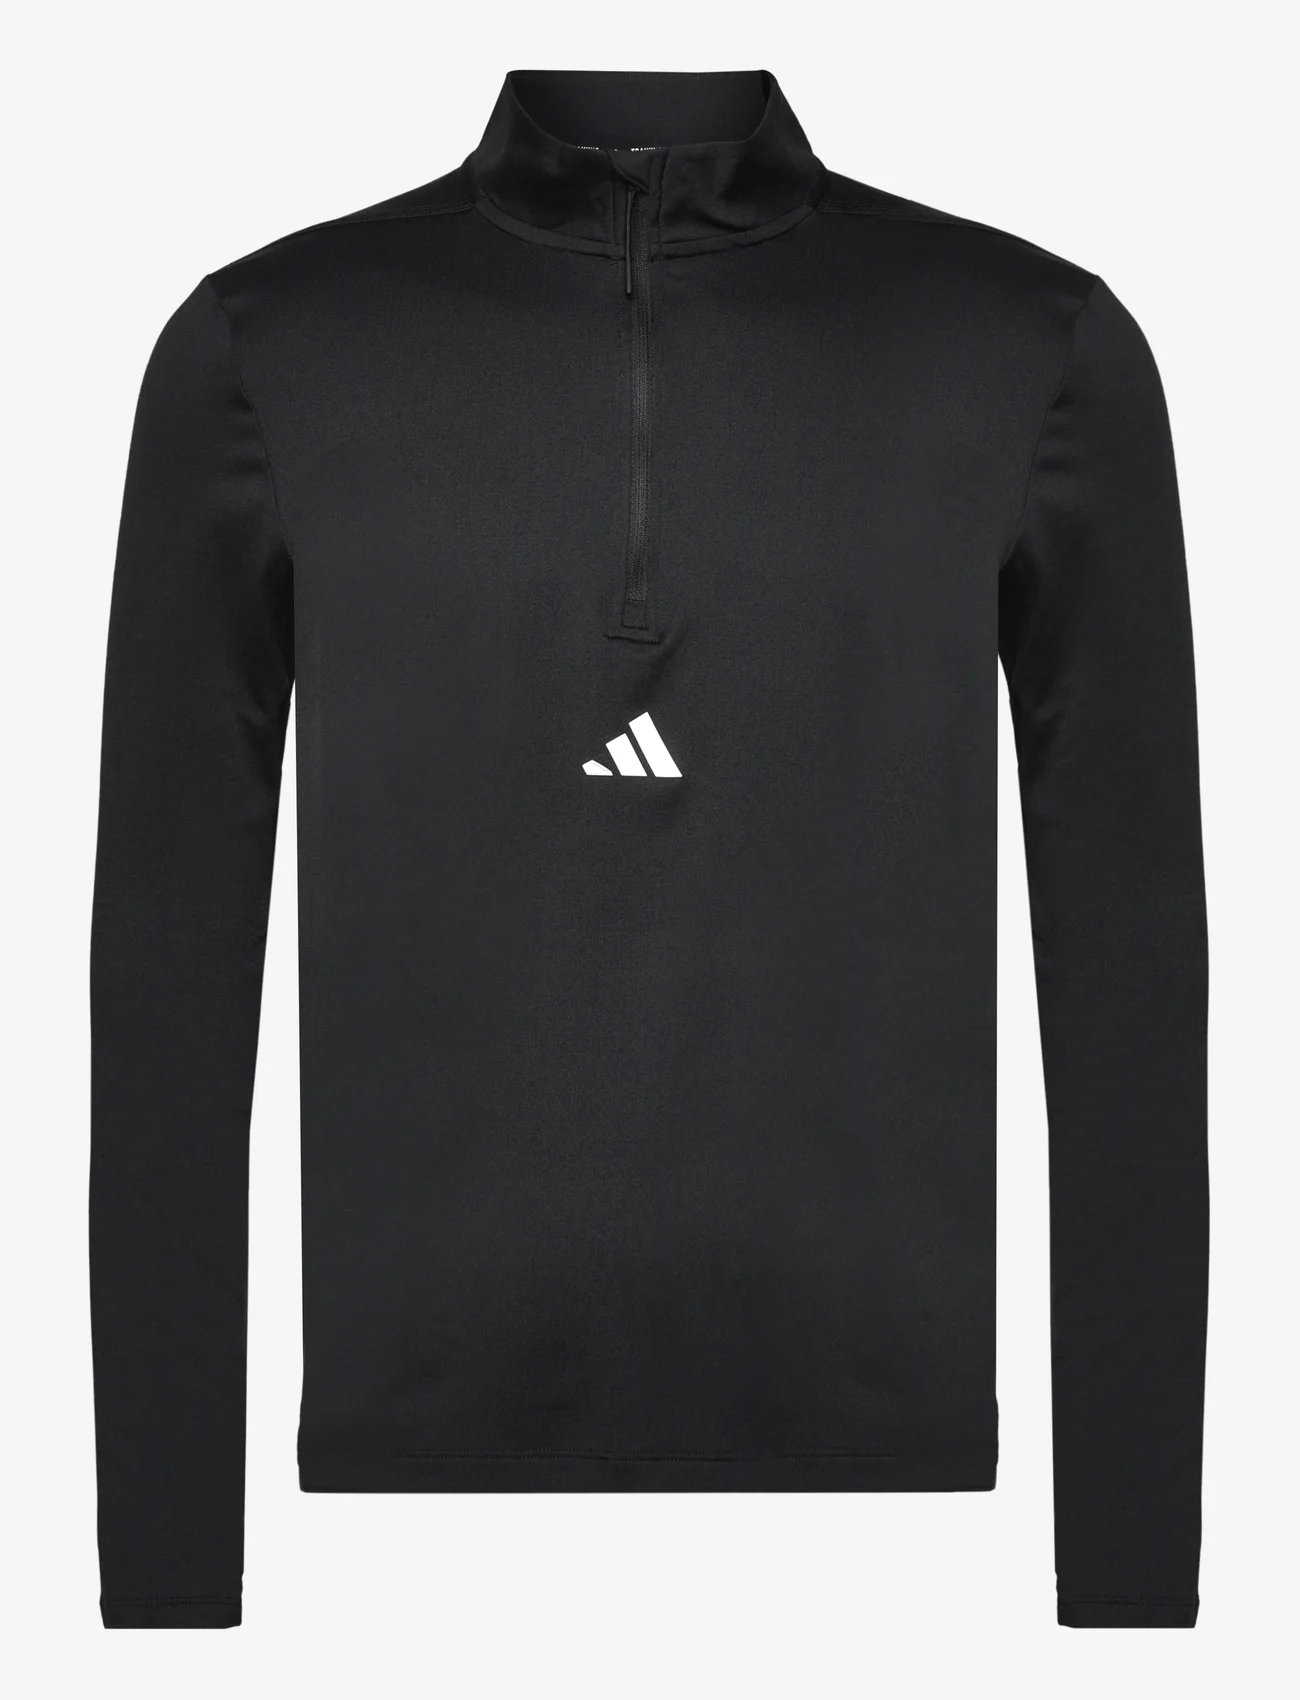 adidas Performance - WO QUARTER ZIP - sweatshirts - black/white - 0